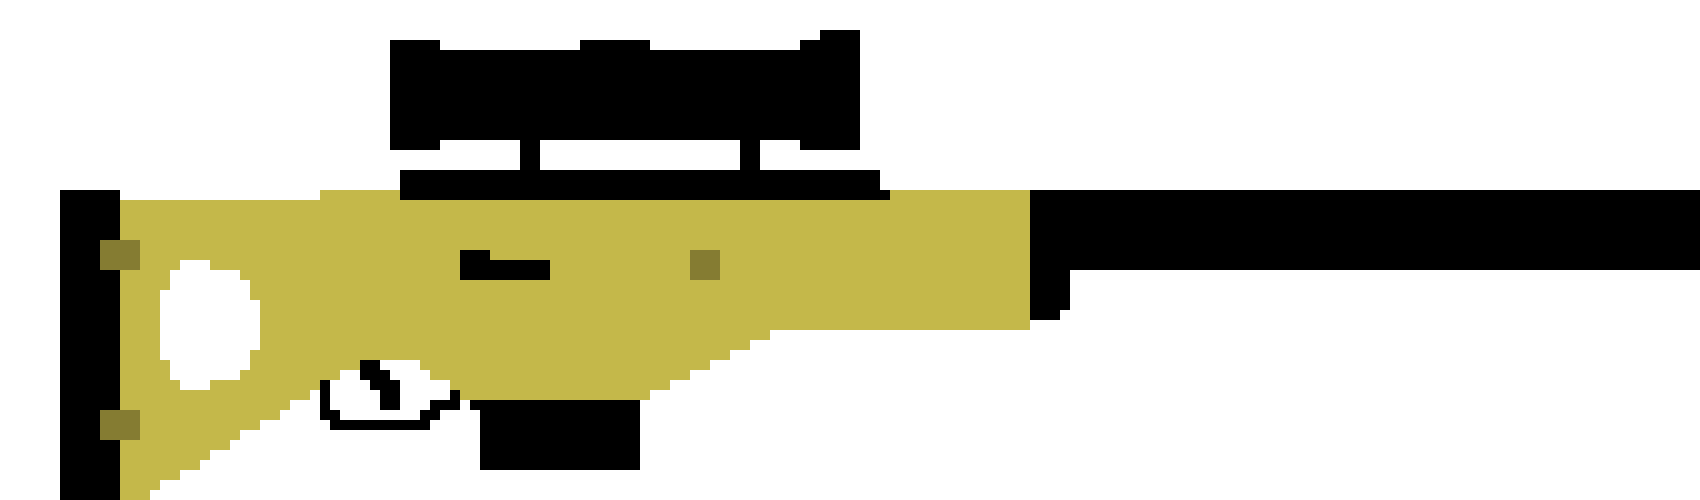 Art Yellow Pixel Royale Black Fortnite Battle PNG Image